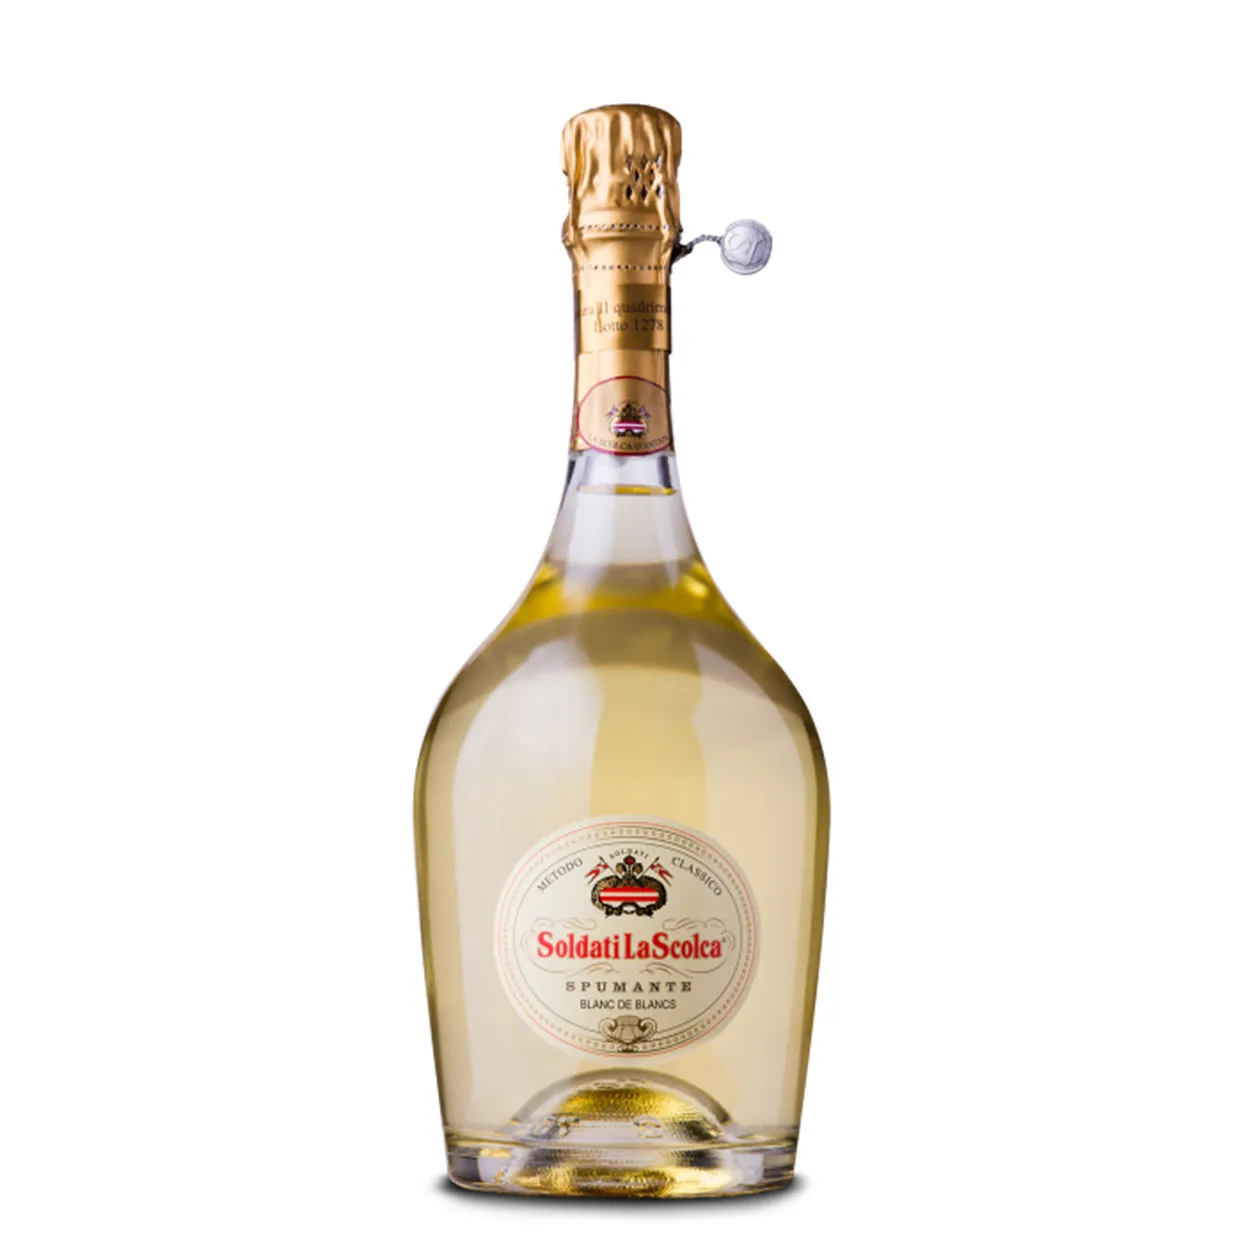 1 bottiglia - "Soldati La Scolca" Blanc de Blancs Pas Dosé Spumante Metodo Classico